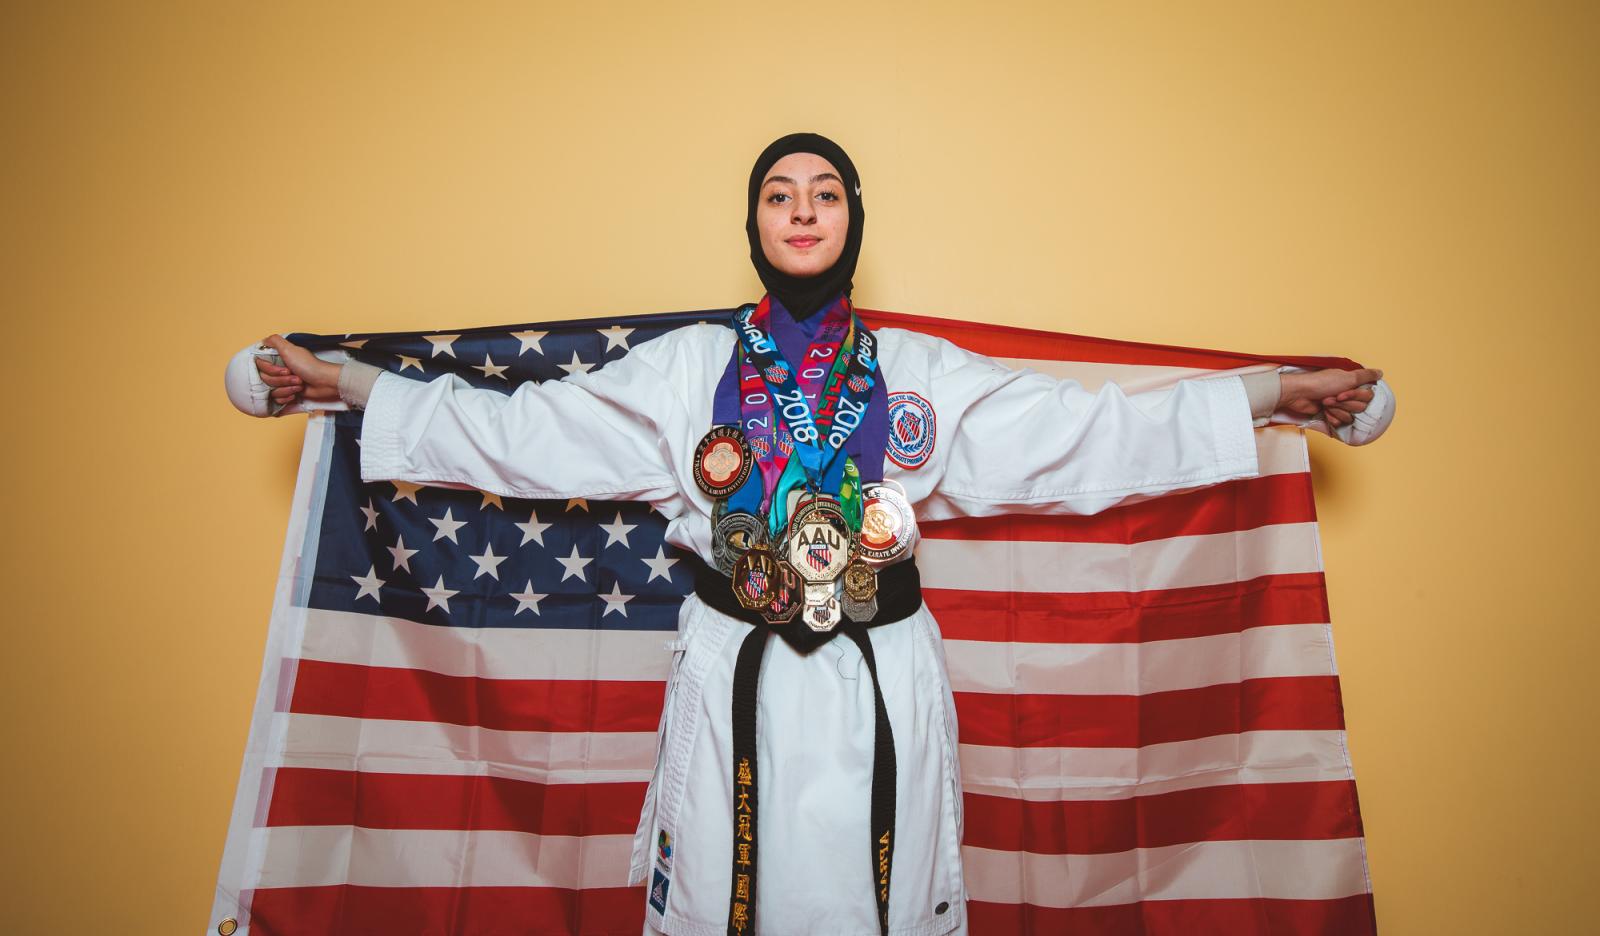 PORTRAITS - Aprar Hassan is a 19-year-old Muslim-American Karate...